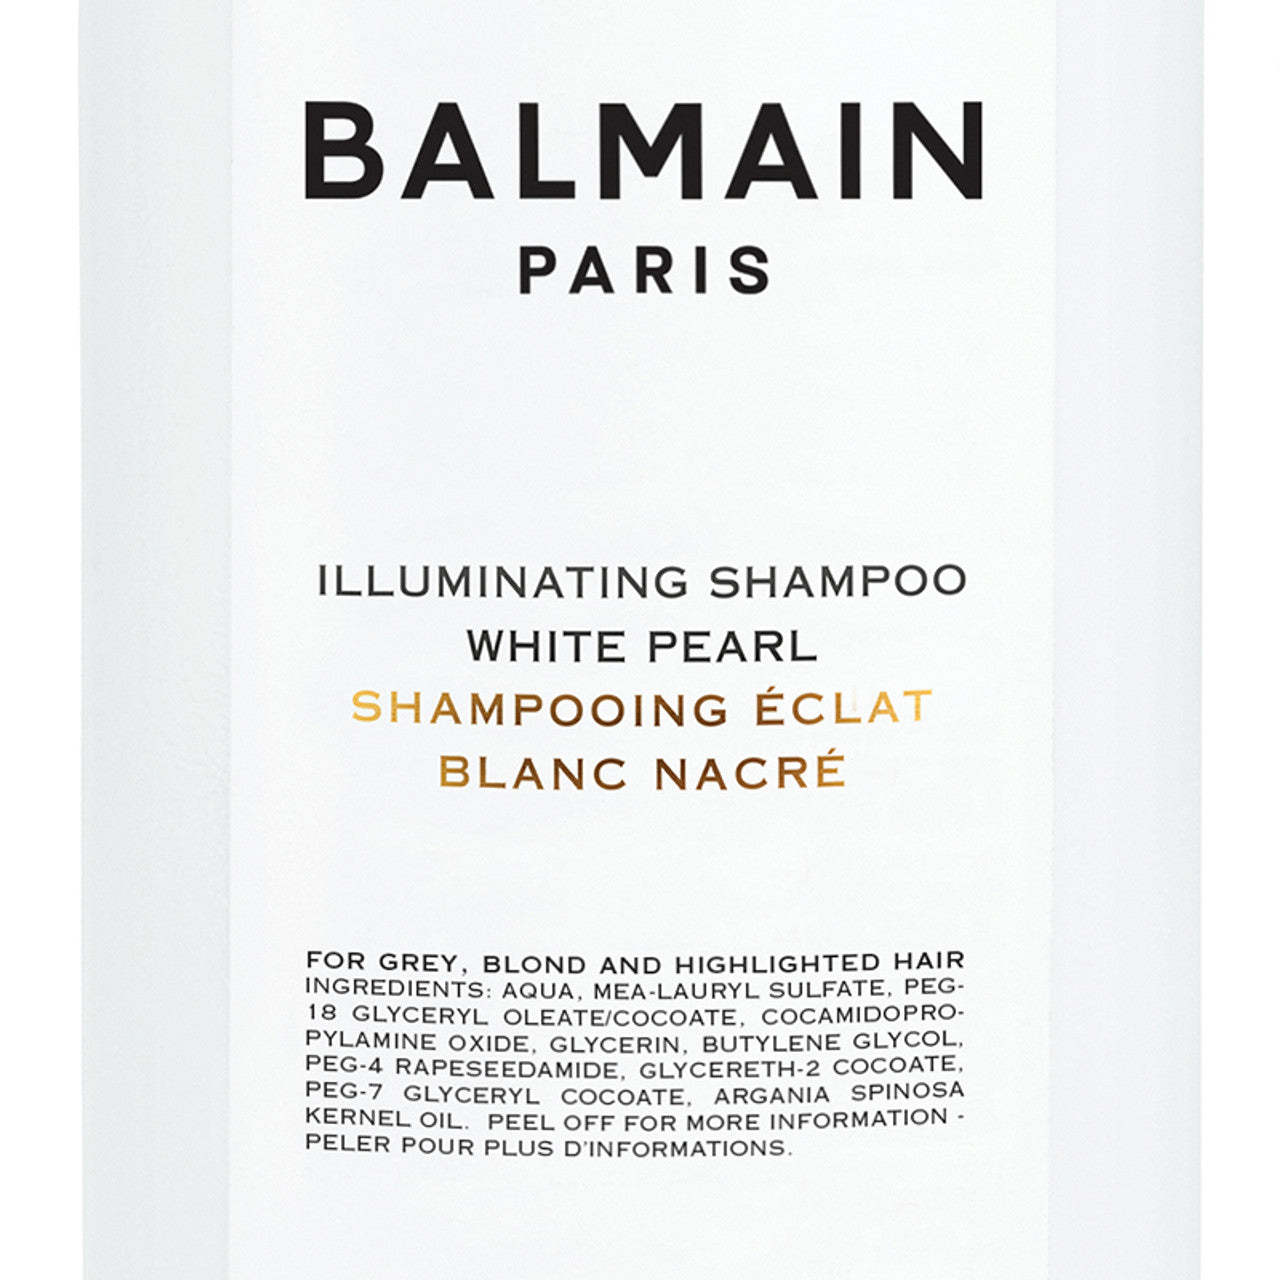 Balmain Paris Illuminating White Pearl Shampoo